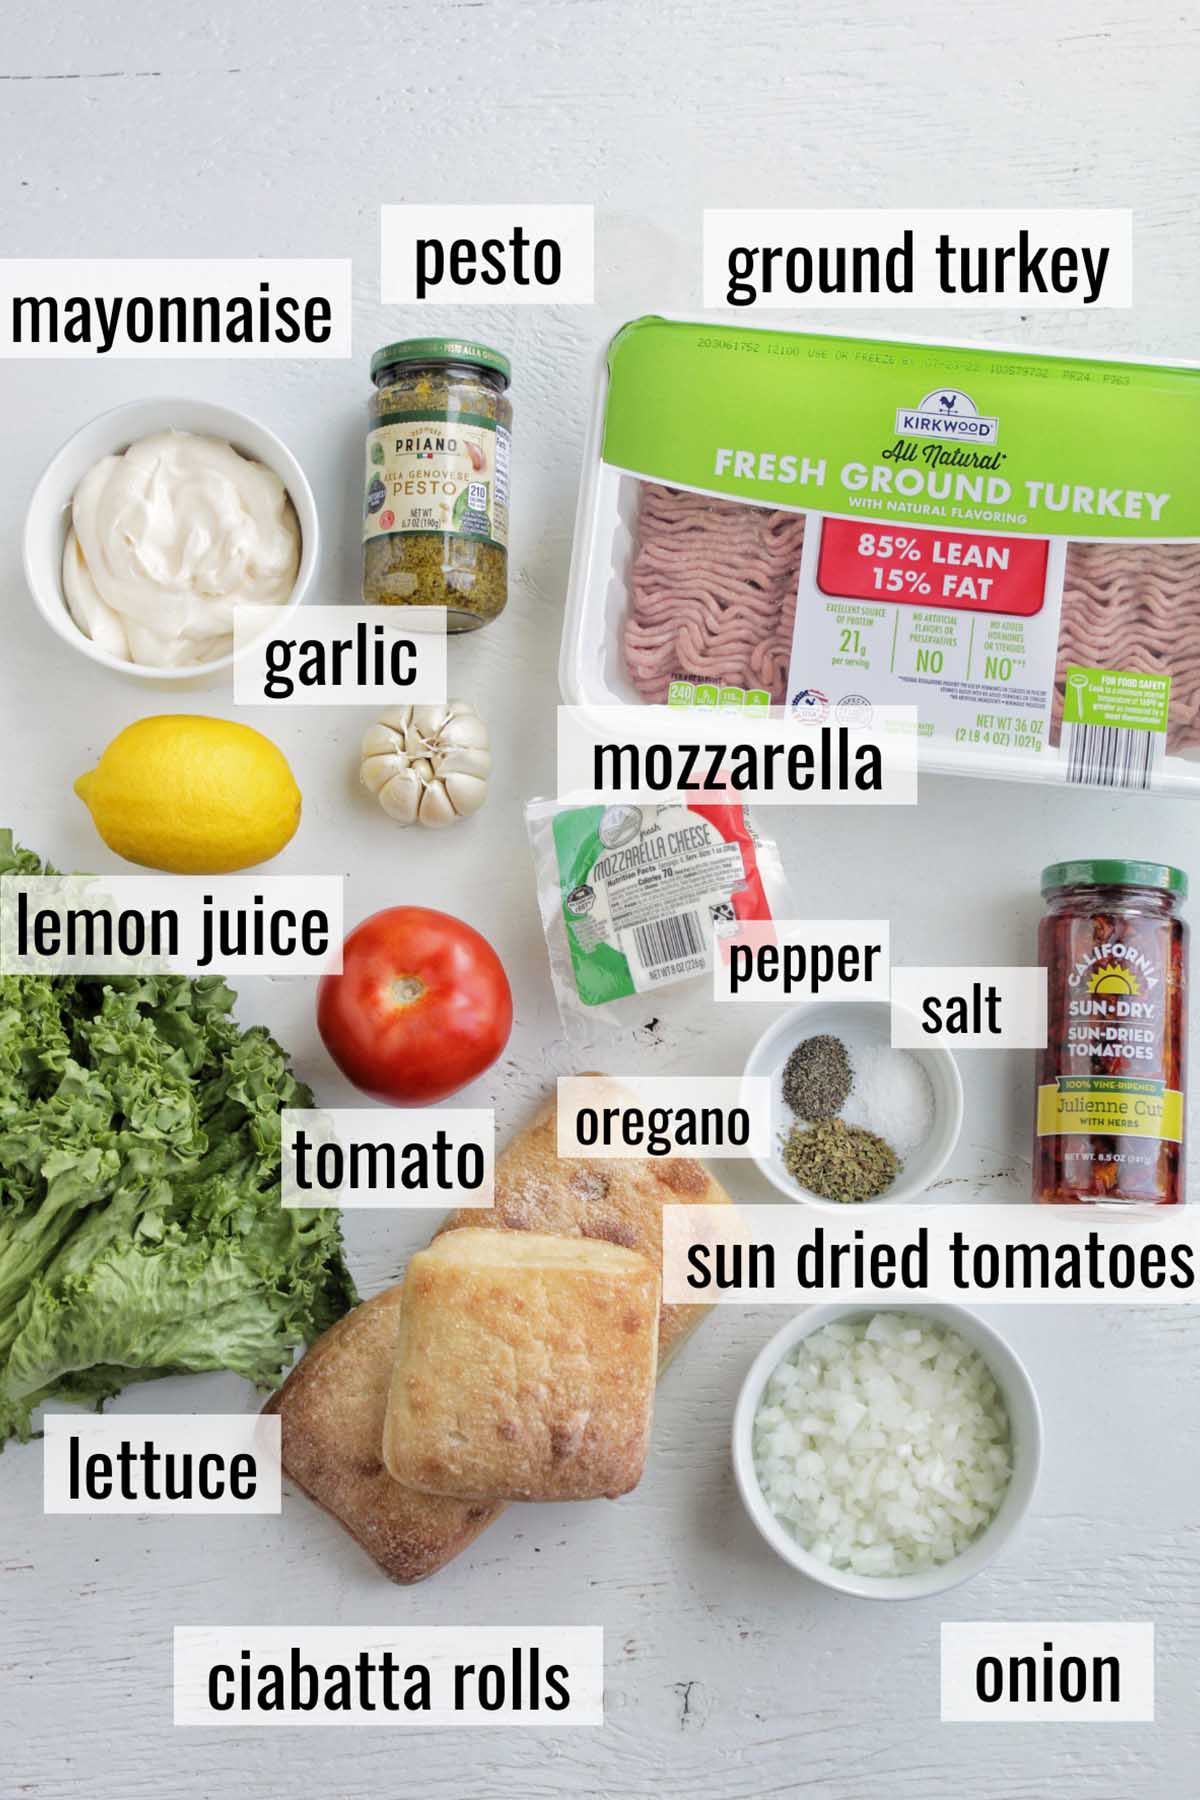 pesto burger ingredients with labels.